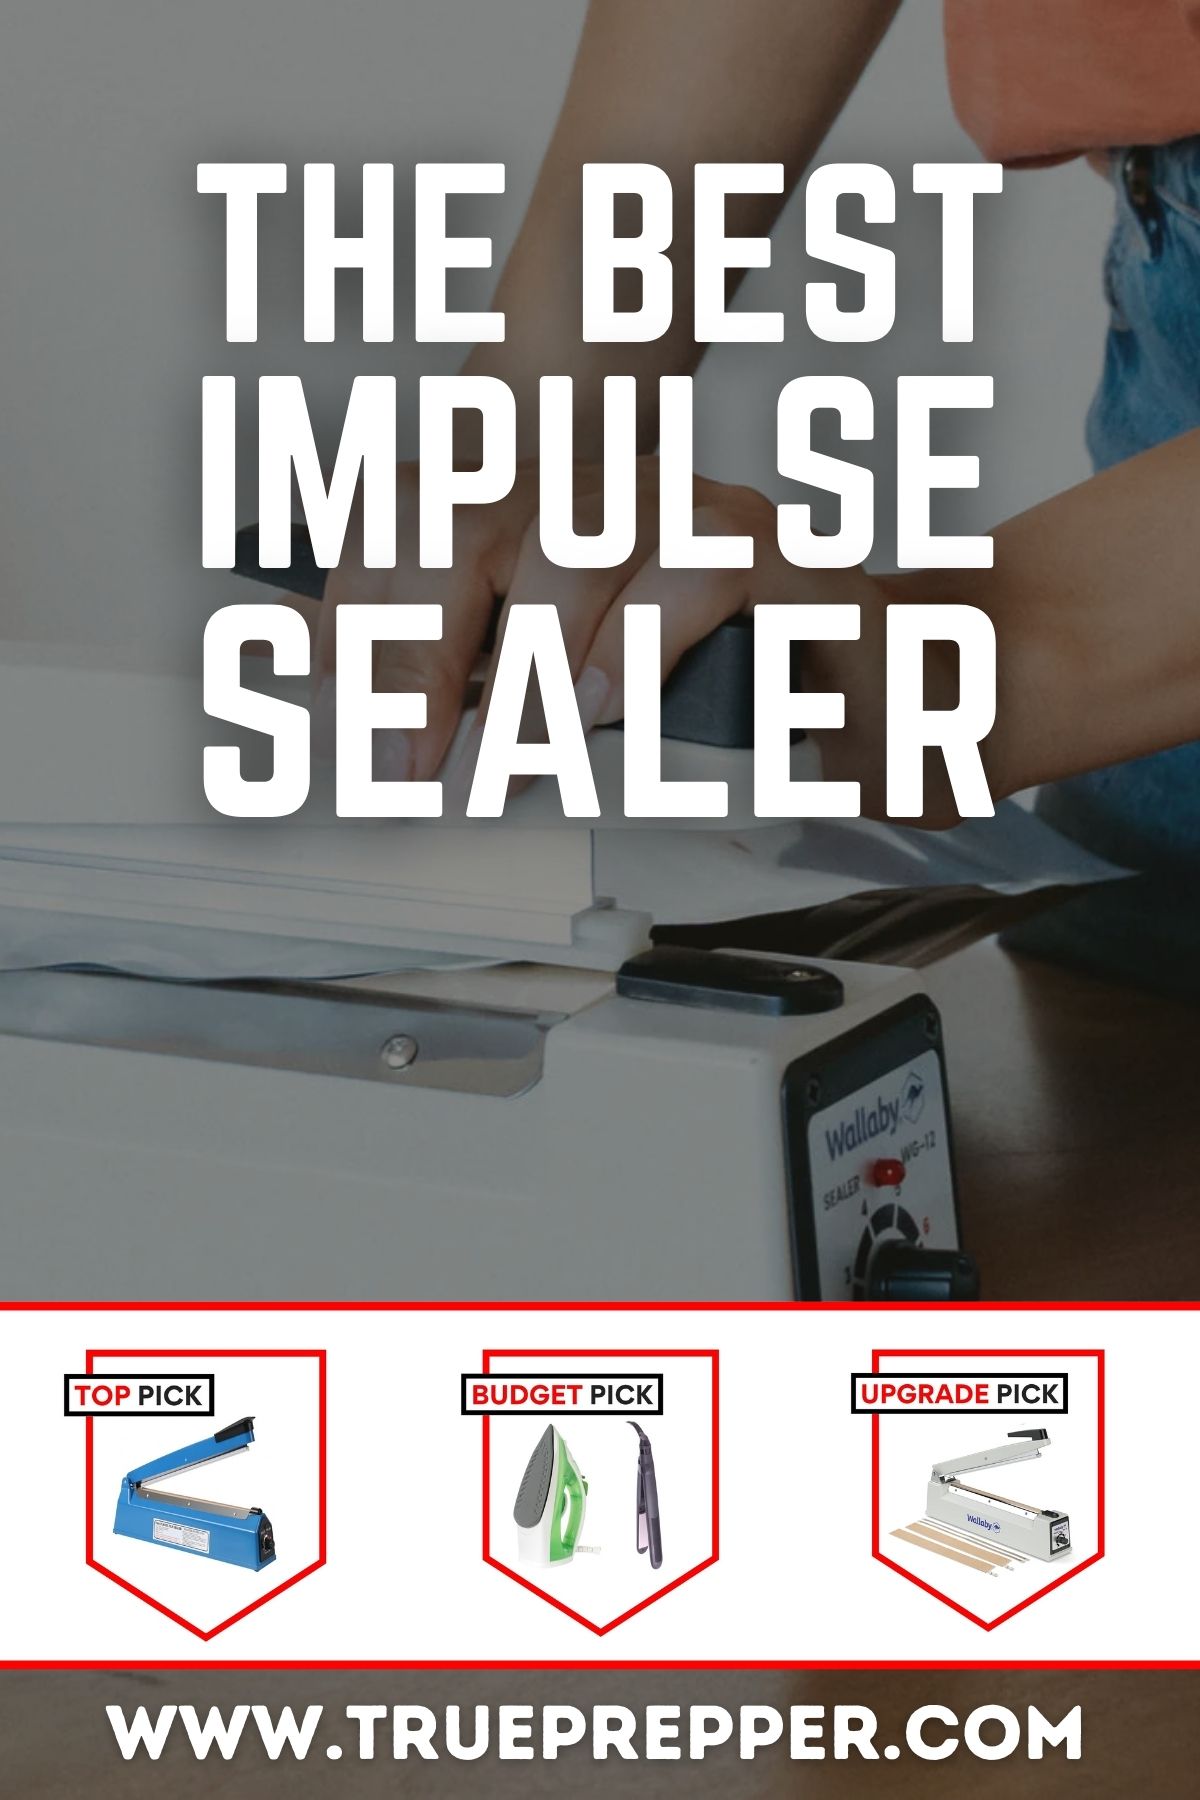 The Best Impulse Heat Sealer